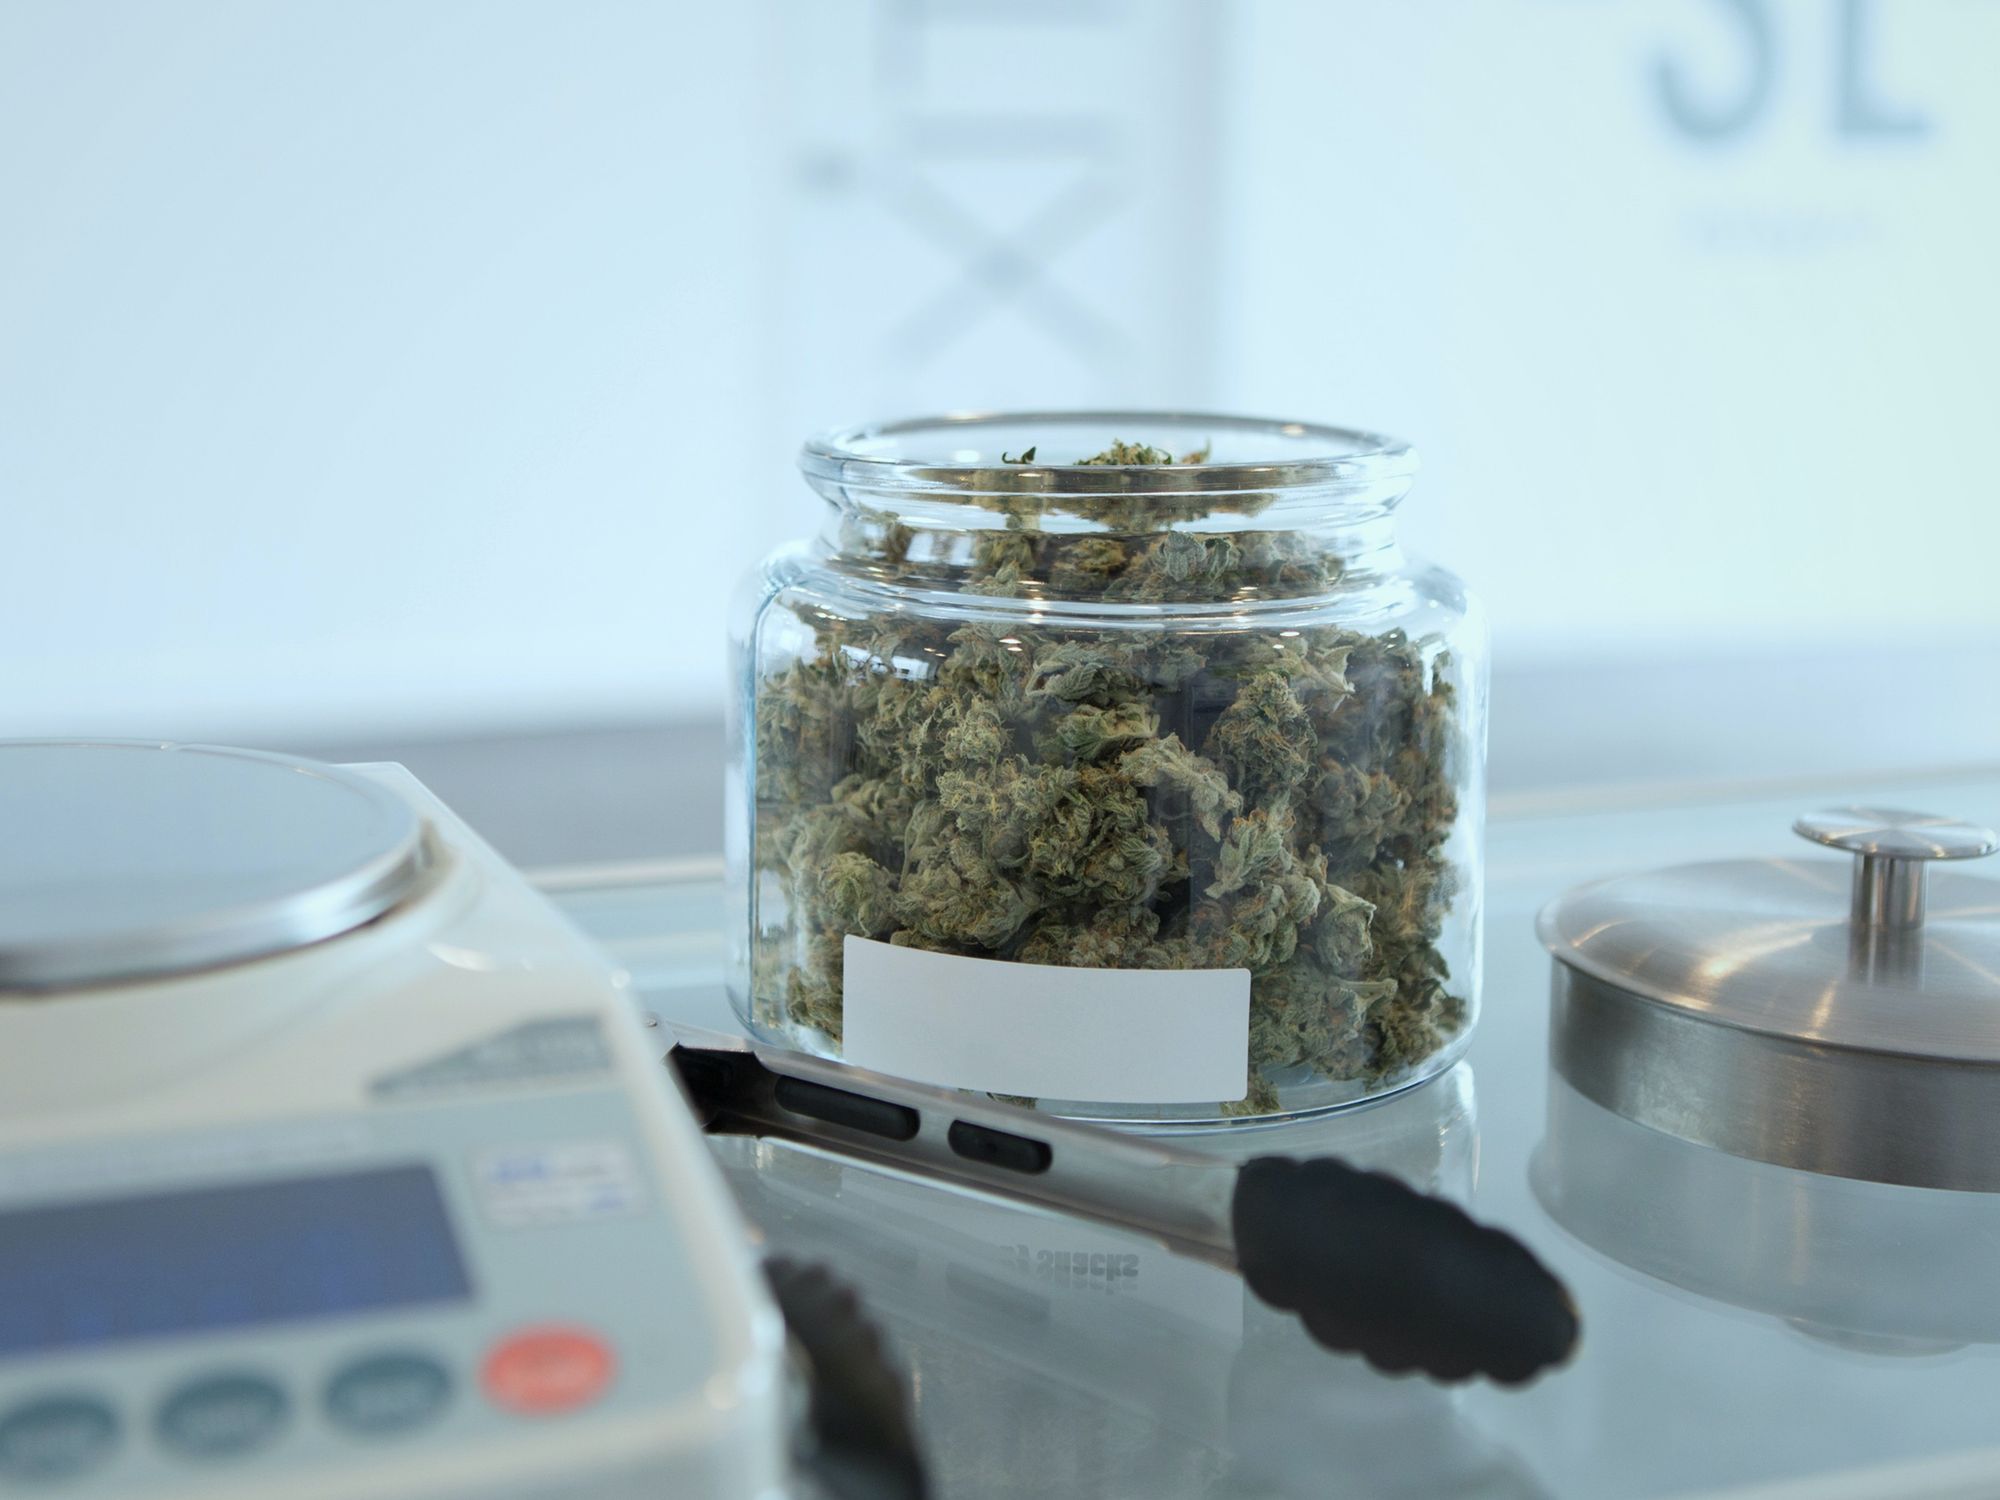 Medical marijuana in a jar